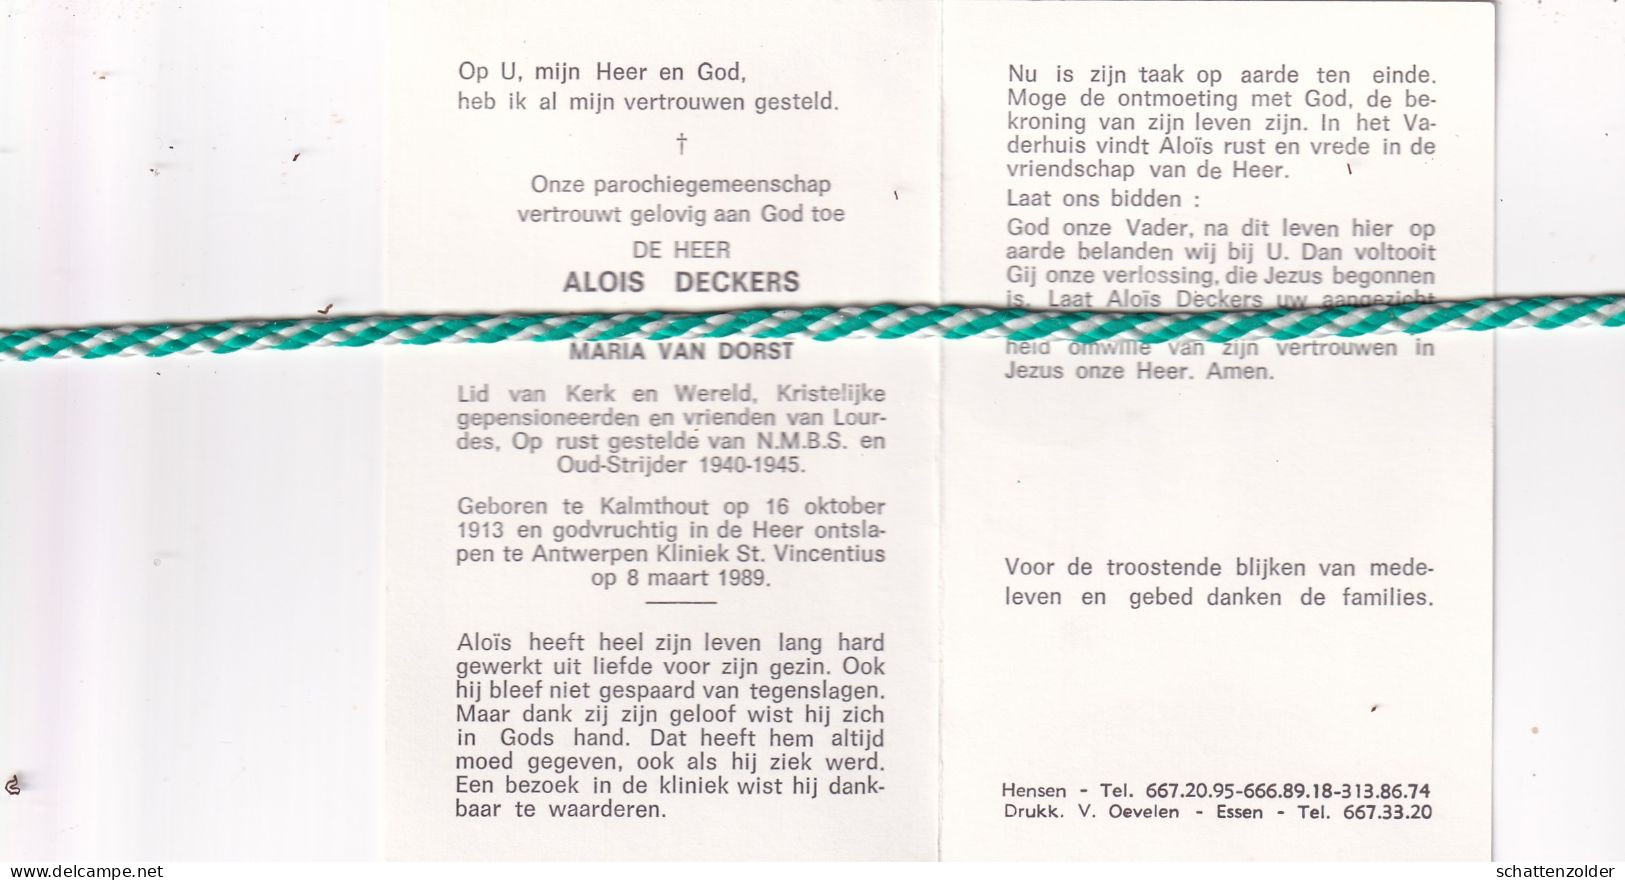 Alois Deckers-Van Dorst, Kalmthout 1913, Antwerpen 1989. Oud-strijder 40-45 - Todesanzeige